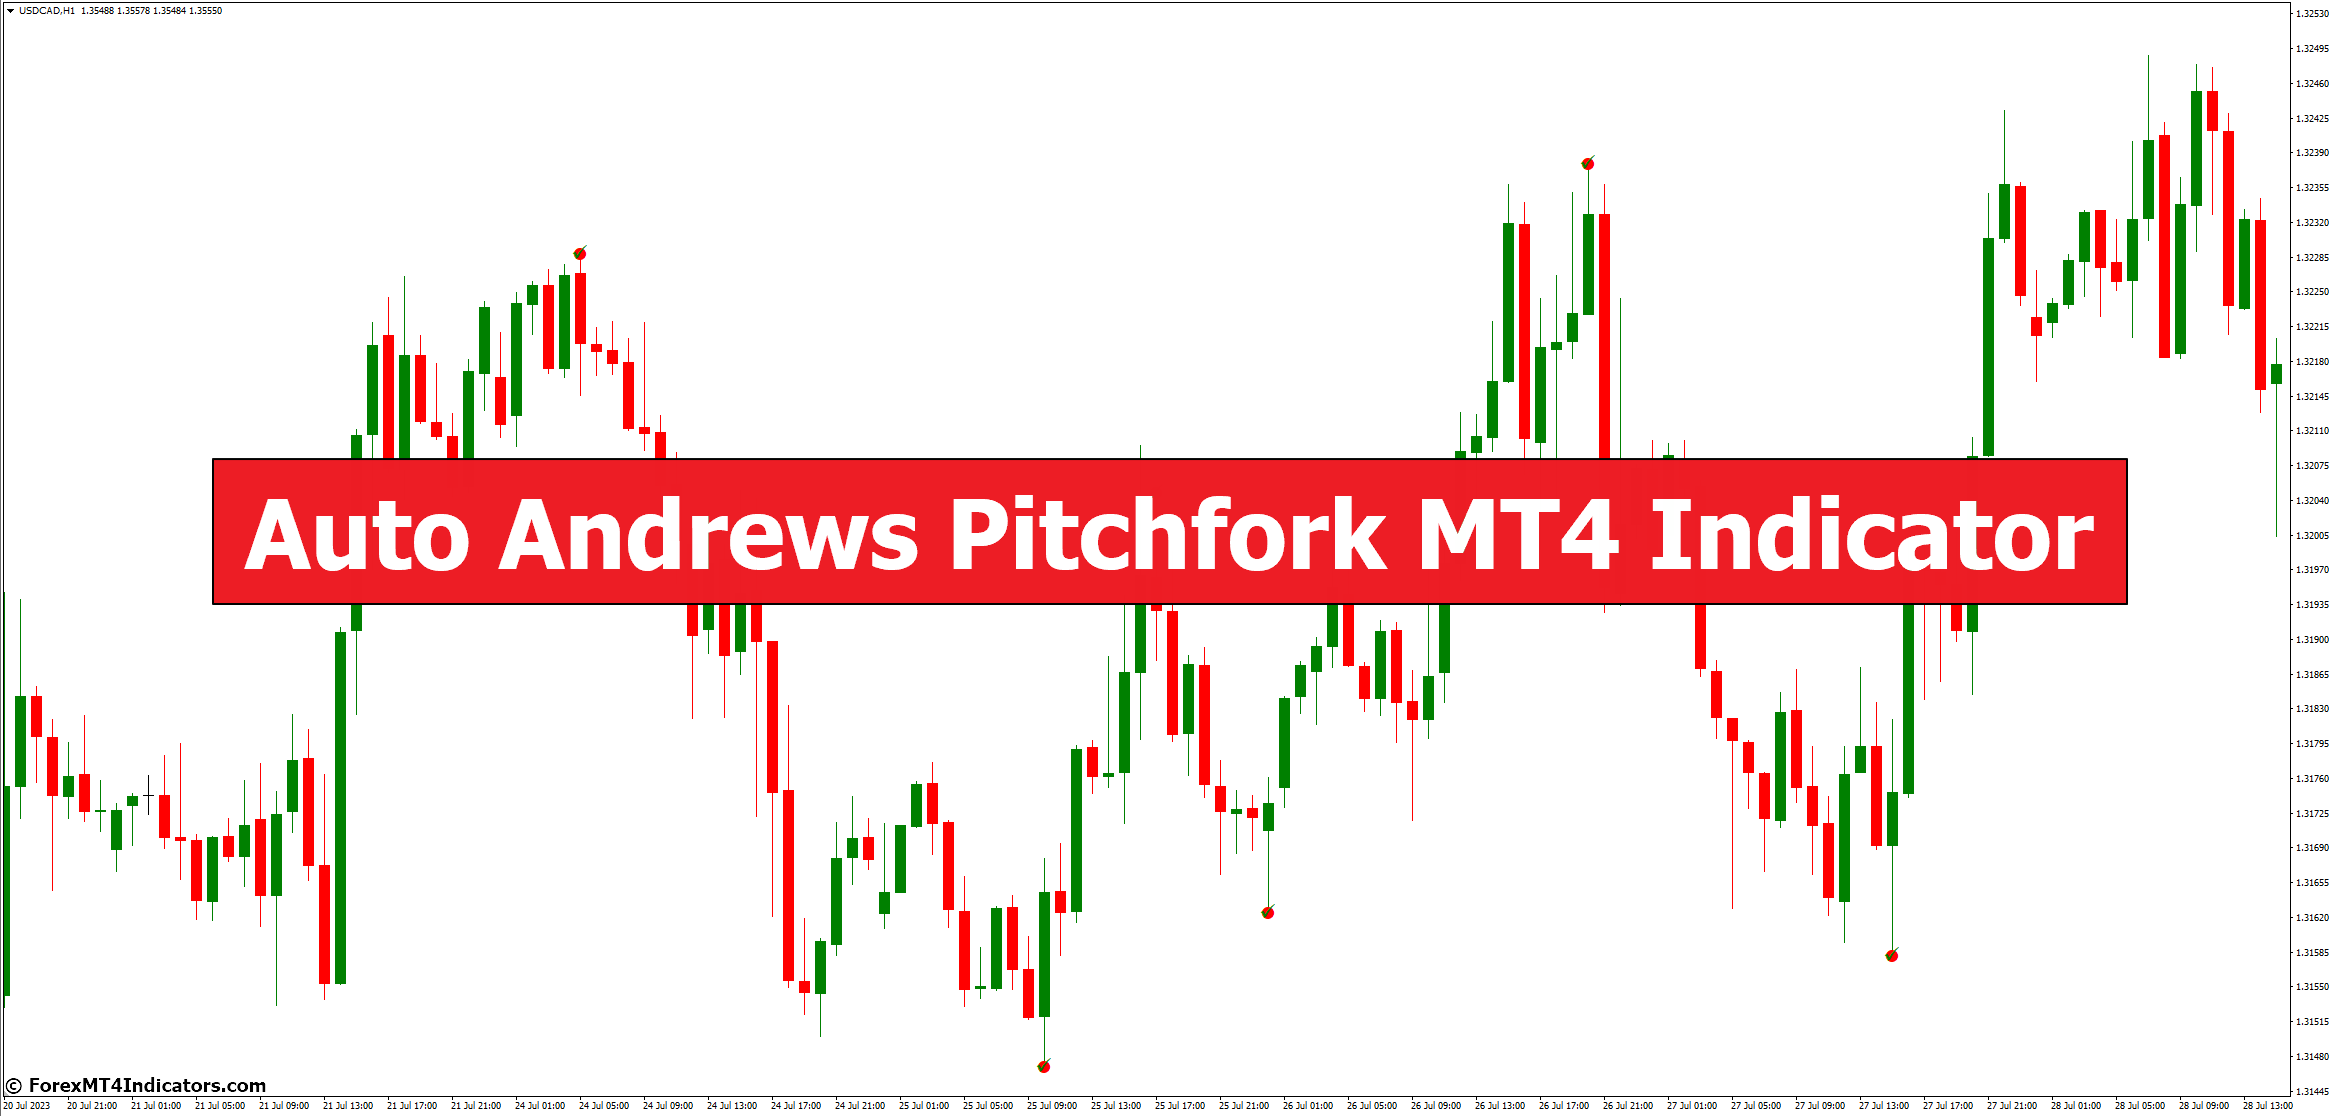 Auto Andrews Pitchfork MT4 Indicator